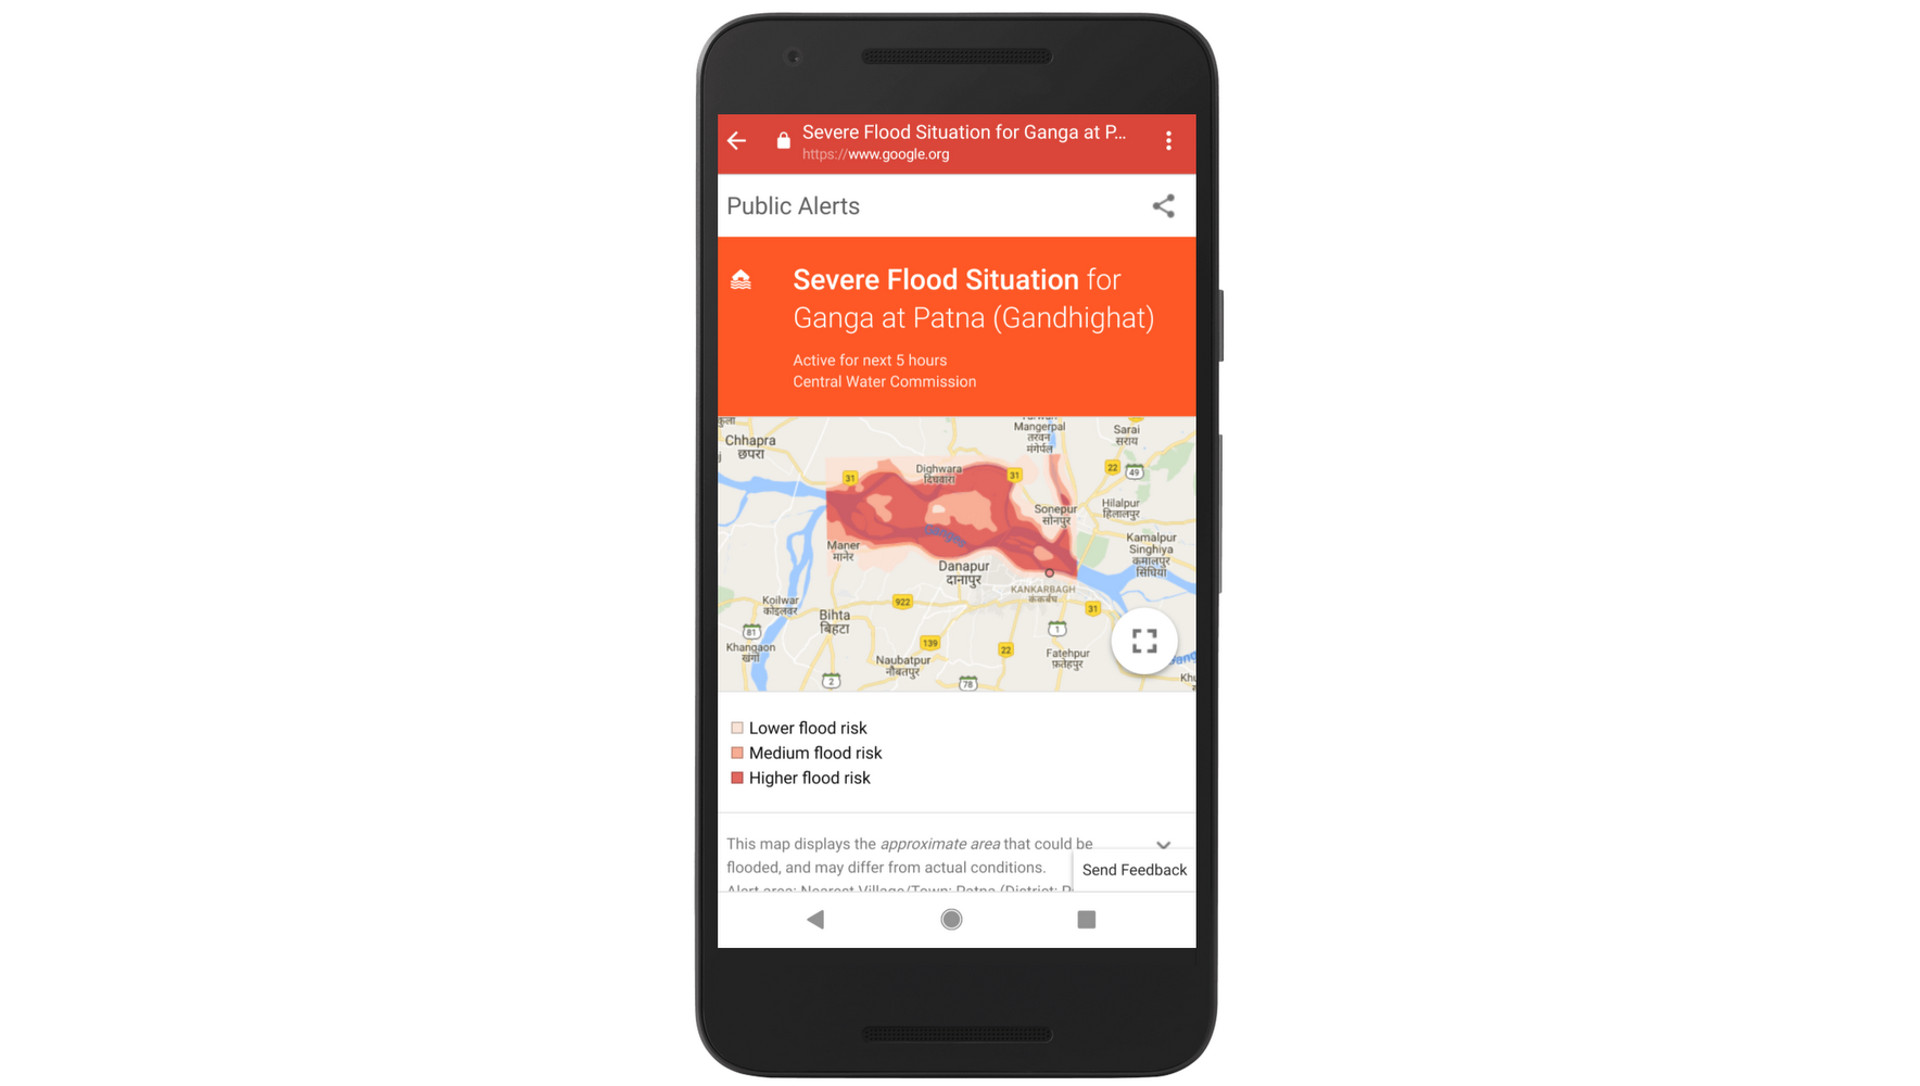 A flood alert using Google's AI-powered system.